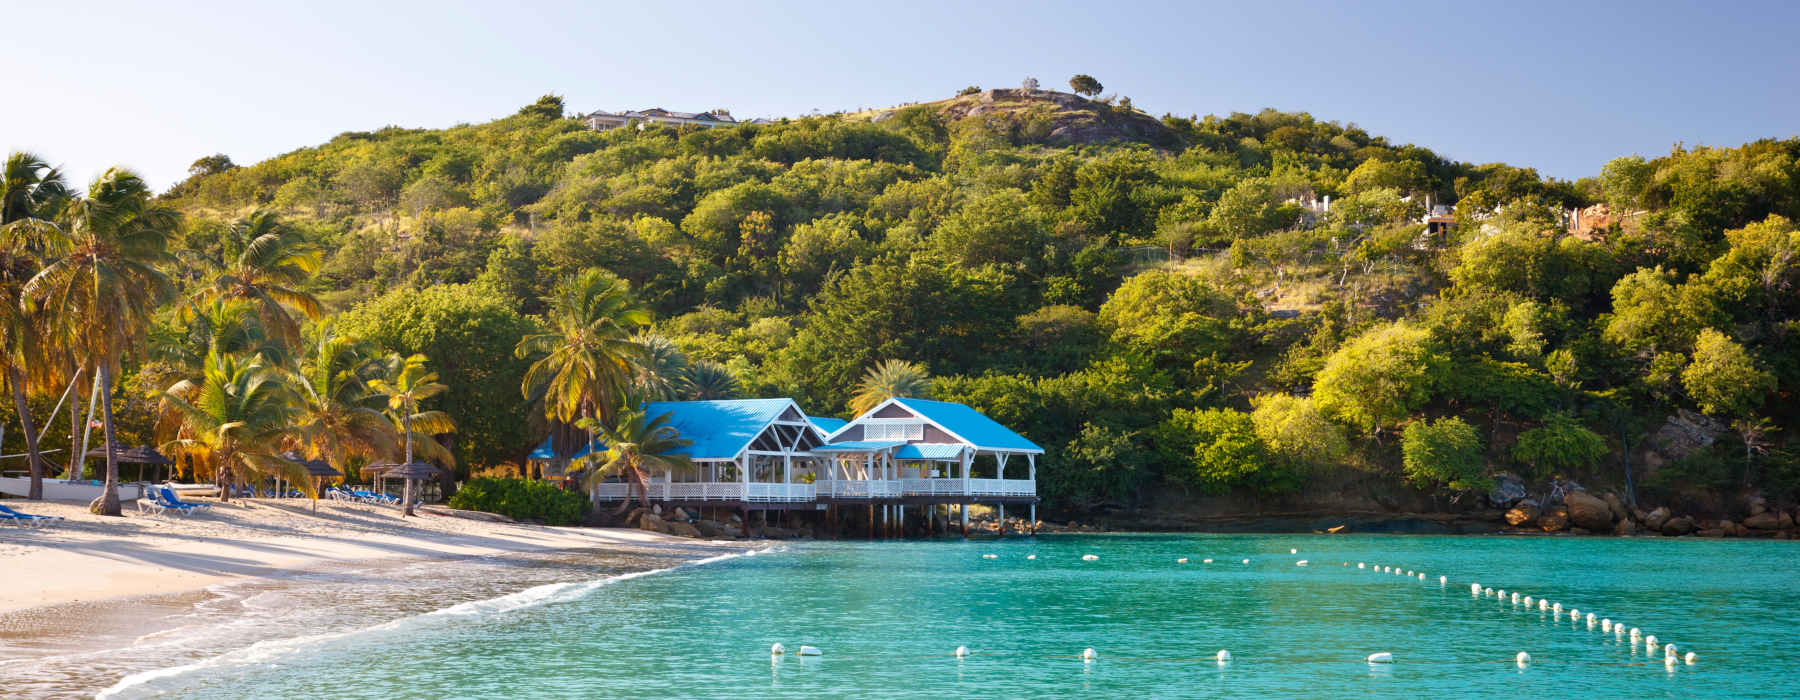 Antigua and Barbuda<br class="hidden-md hidden-lg" /> Where Can I Go